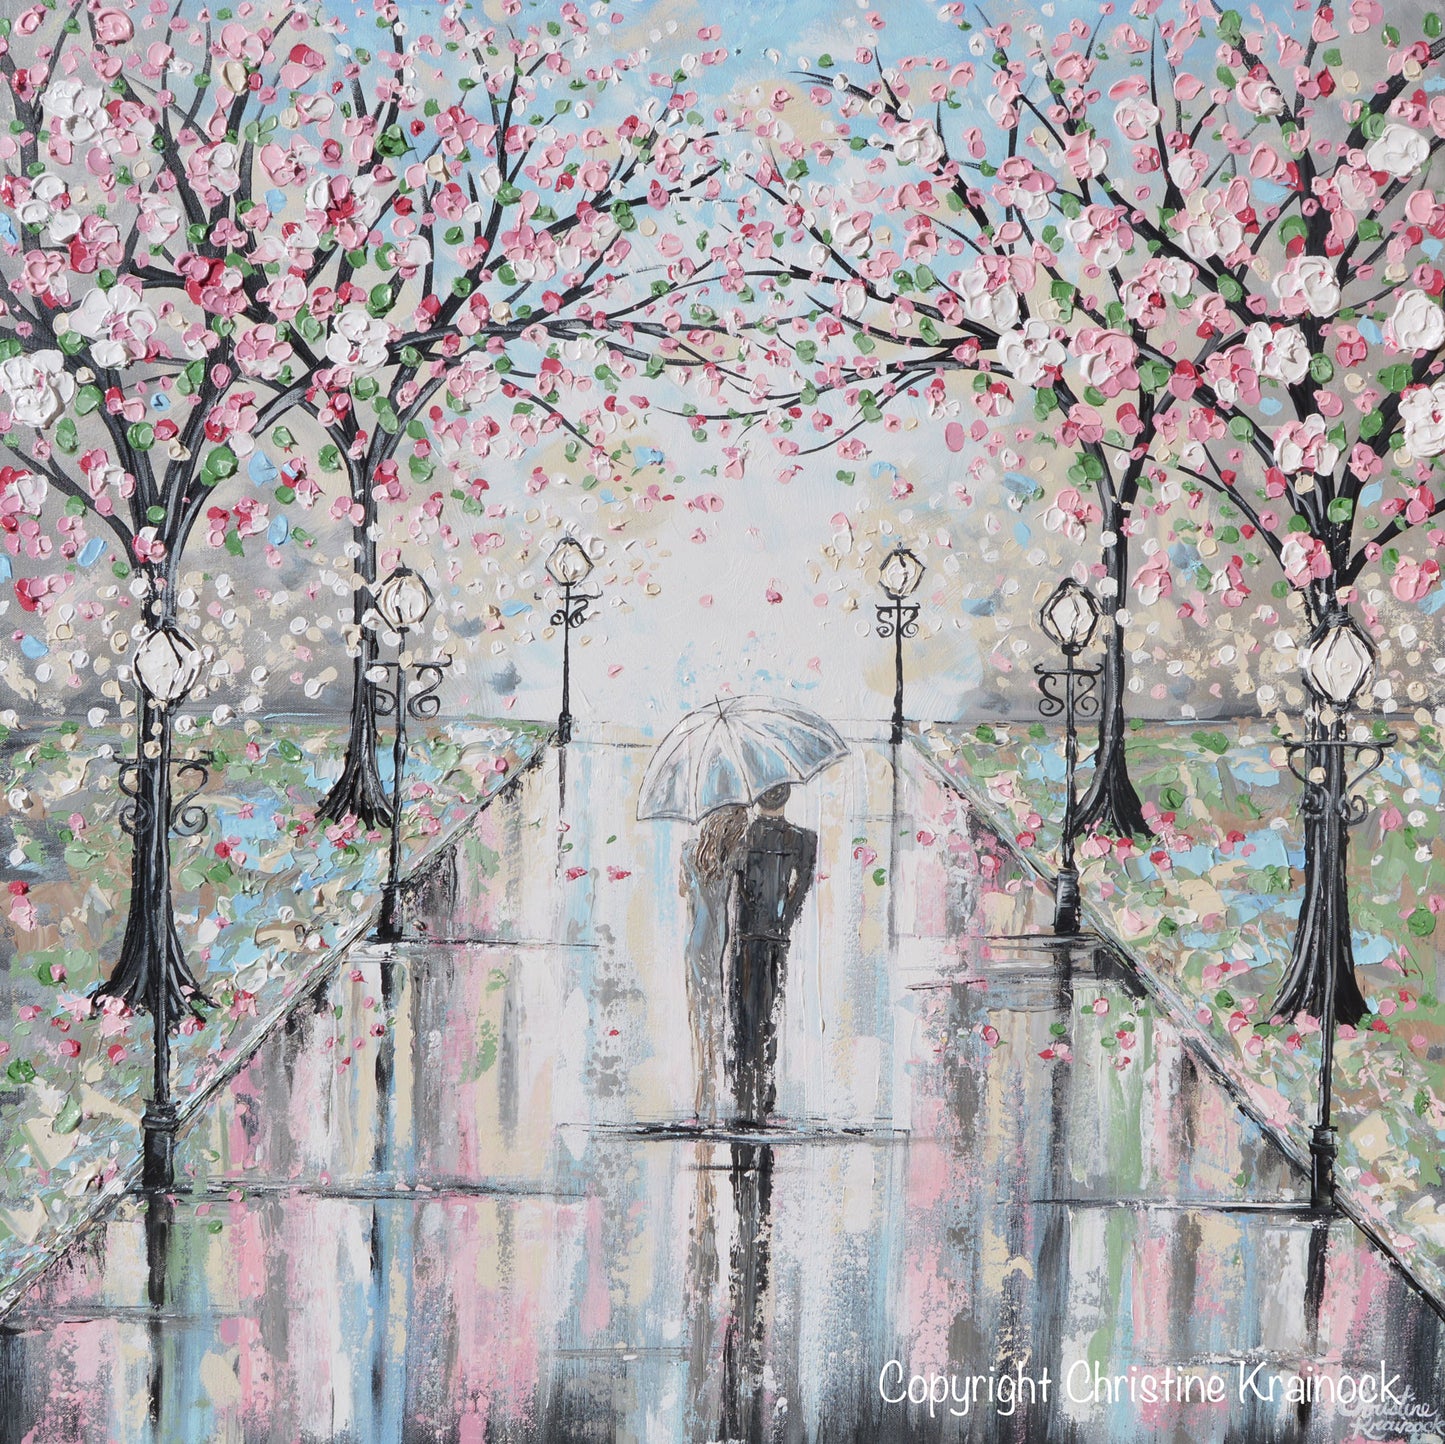 ORIGINAL Art Abstract Painting Couple with Umbrella Walk Rain Pink Cherry Trees Textured White Grey LARGE Wall Art Decor 36x36" - Christine Krainock Art - Contemporary Art by Christine - 6